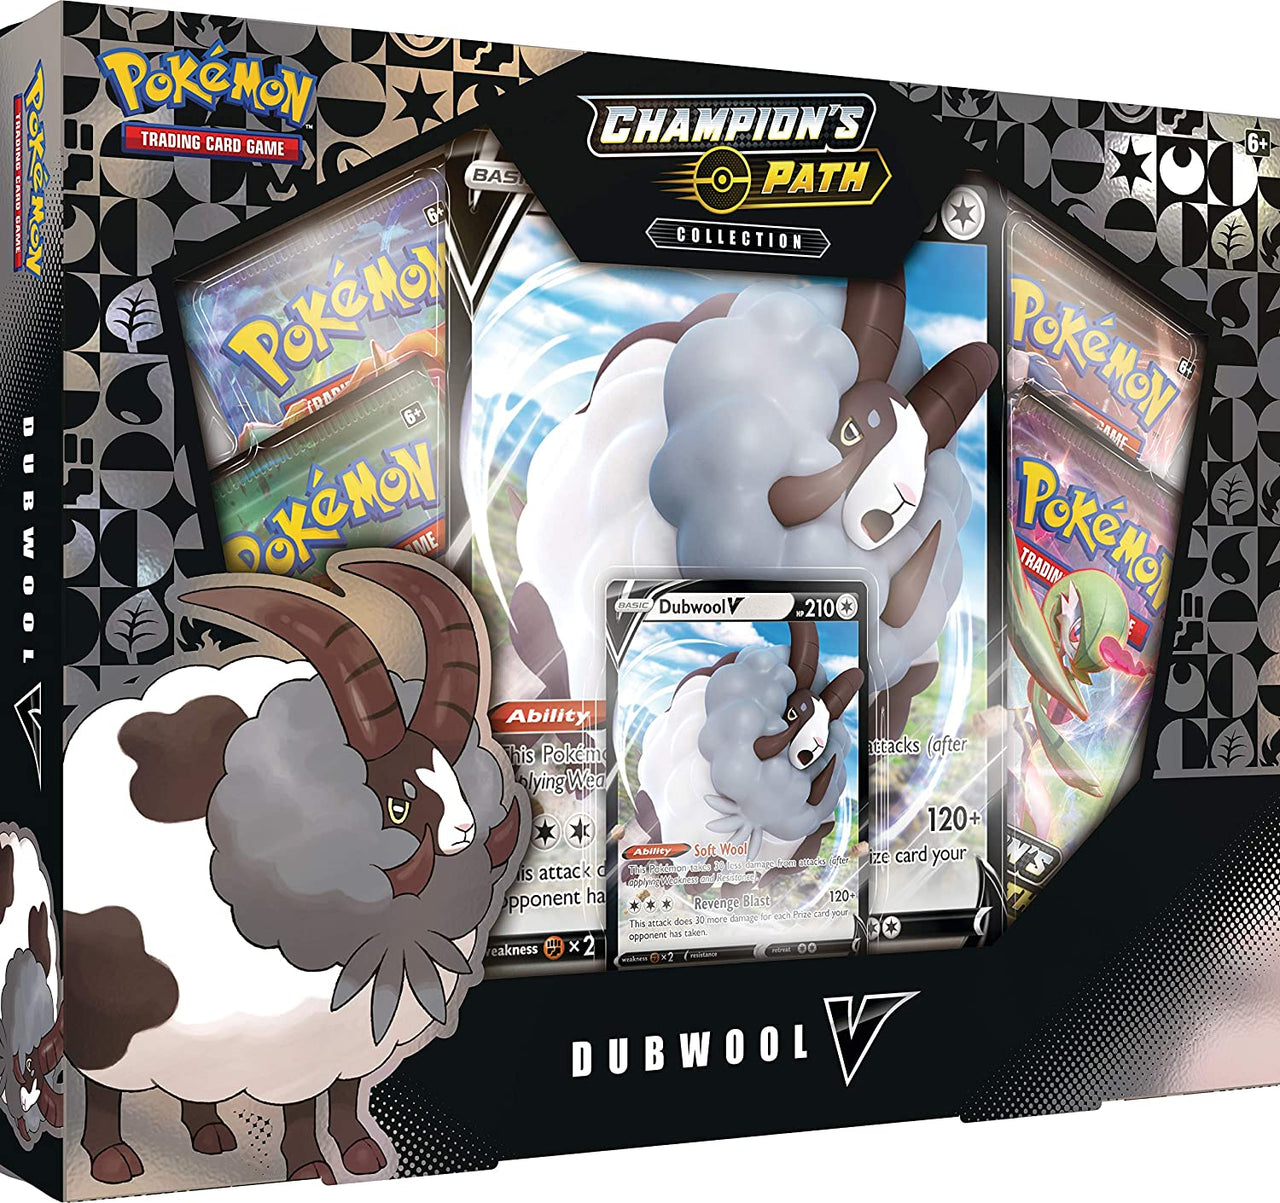 Pokémon TCG: Champion's Path - Dubwool V Collection Box - PokeRvmCollection Box